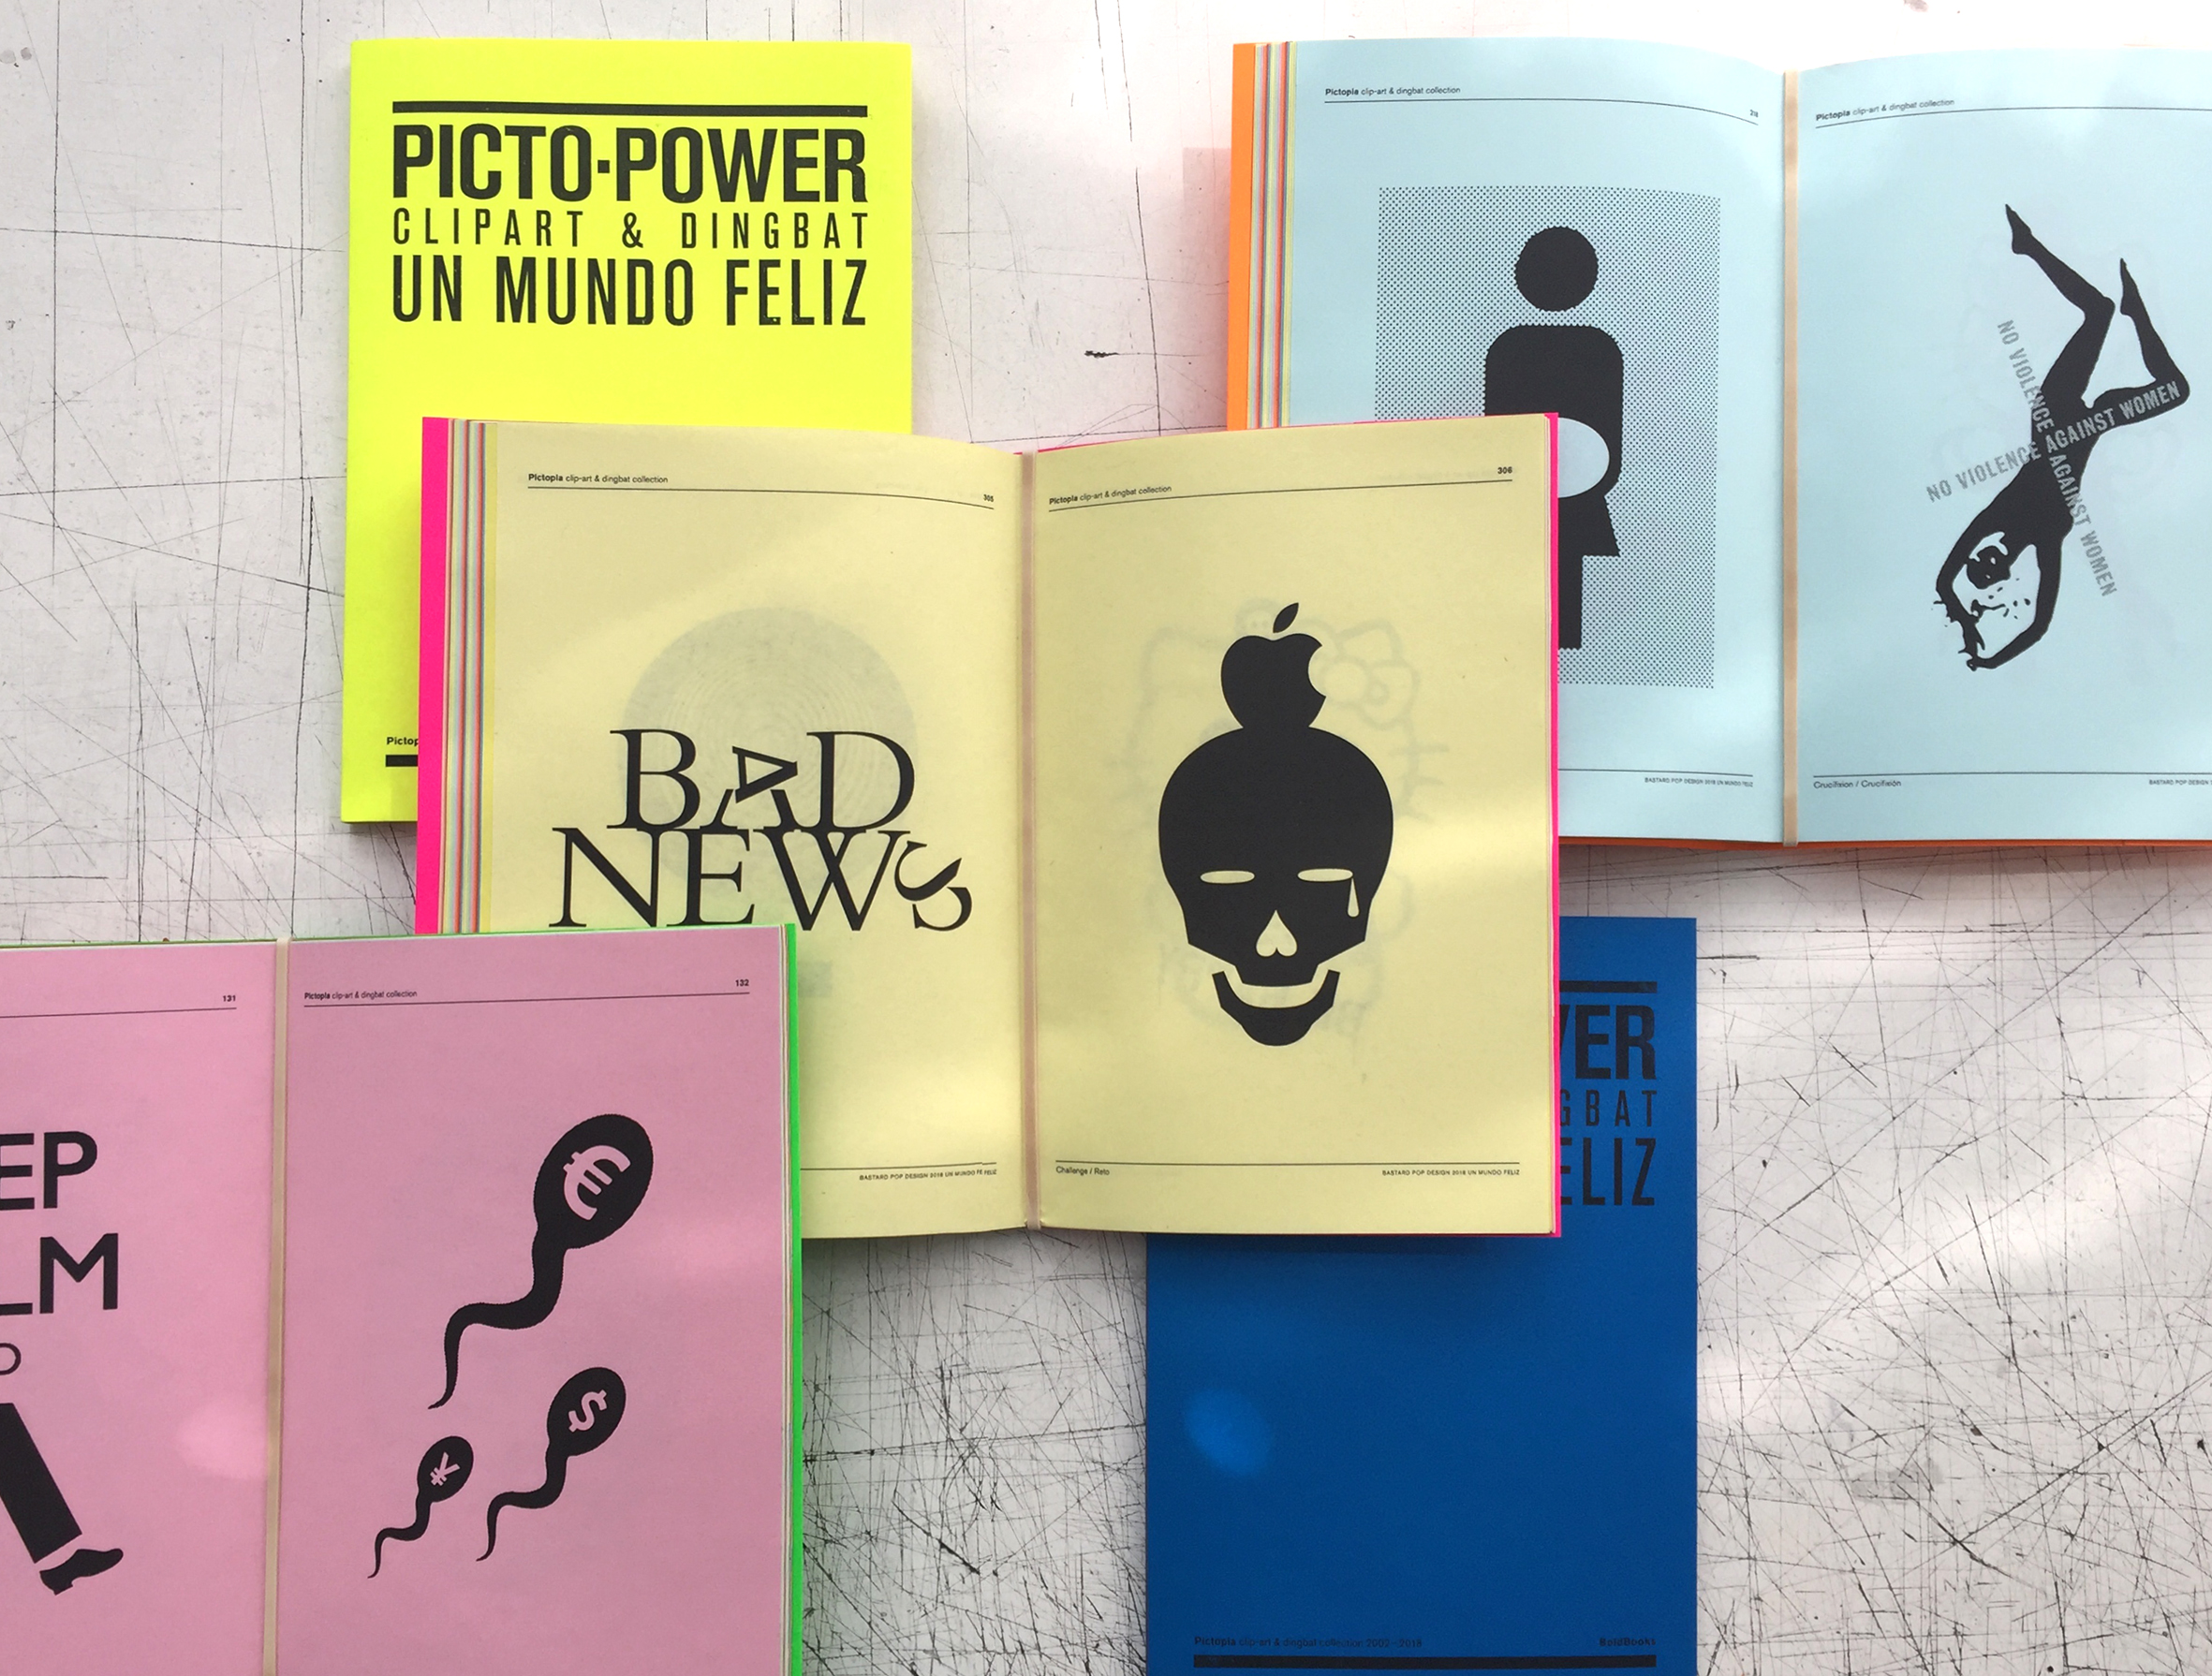 Picto-Power / Pictopia clip-art & dingbat collection 2002—2018 by Un Mundo Feliz / Sonia Díaz y Gabriel Martínez - Creative Work - $i